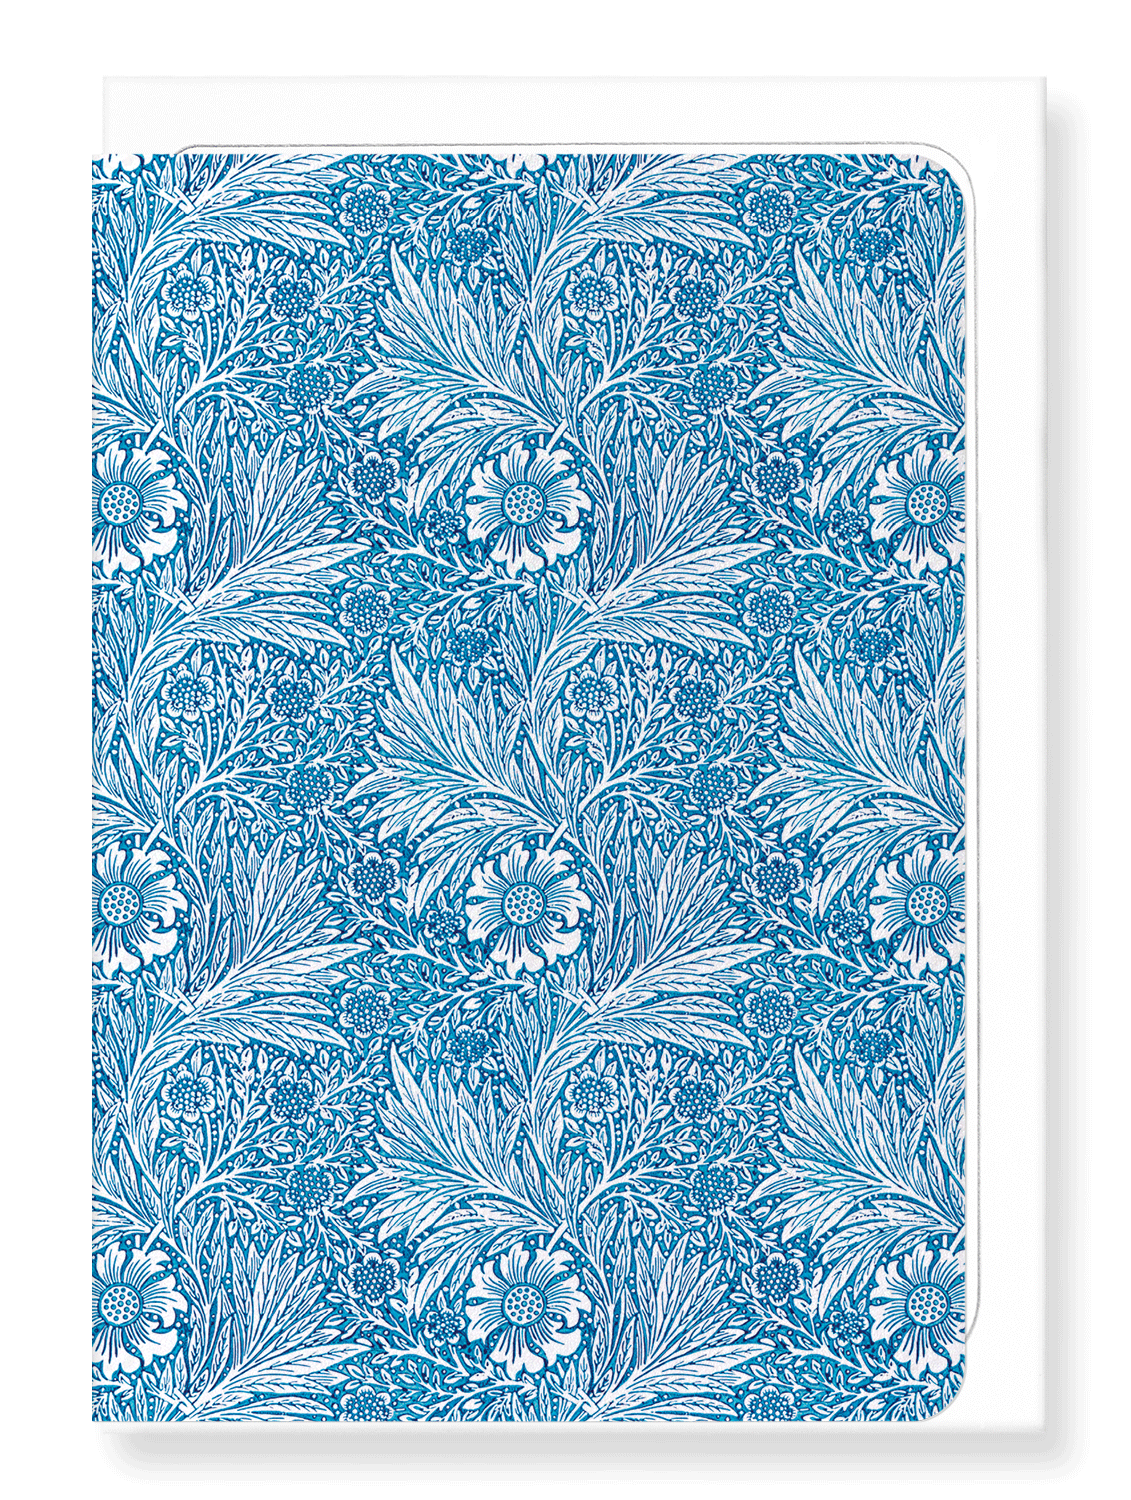 Ezen Designs - Blue marigold - Greeting Card - Front